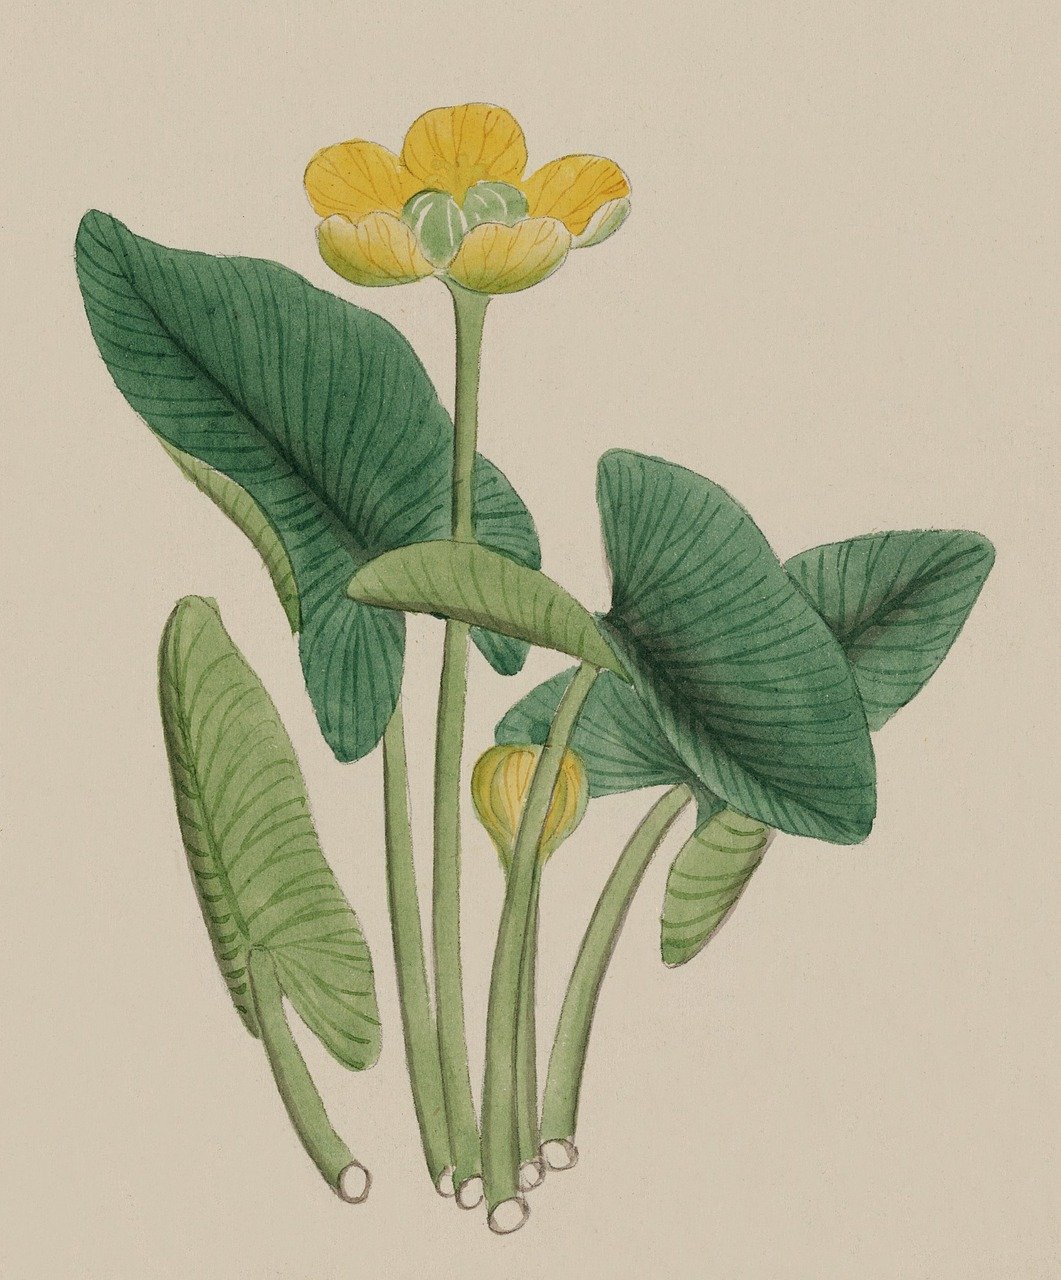 a drawing of a yellow flower with green leaves, an illustration of, by Maria Johanna Görtz, sōsaku hanga, india, woo kim, scientific depiction, kimitake yoshioka